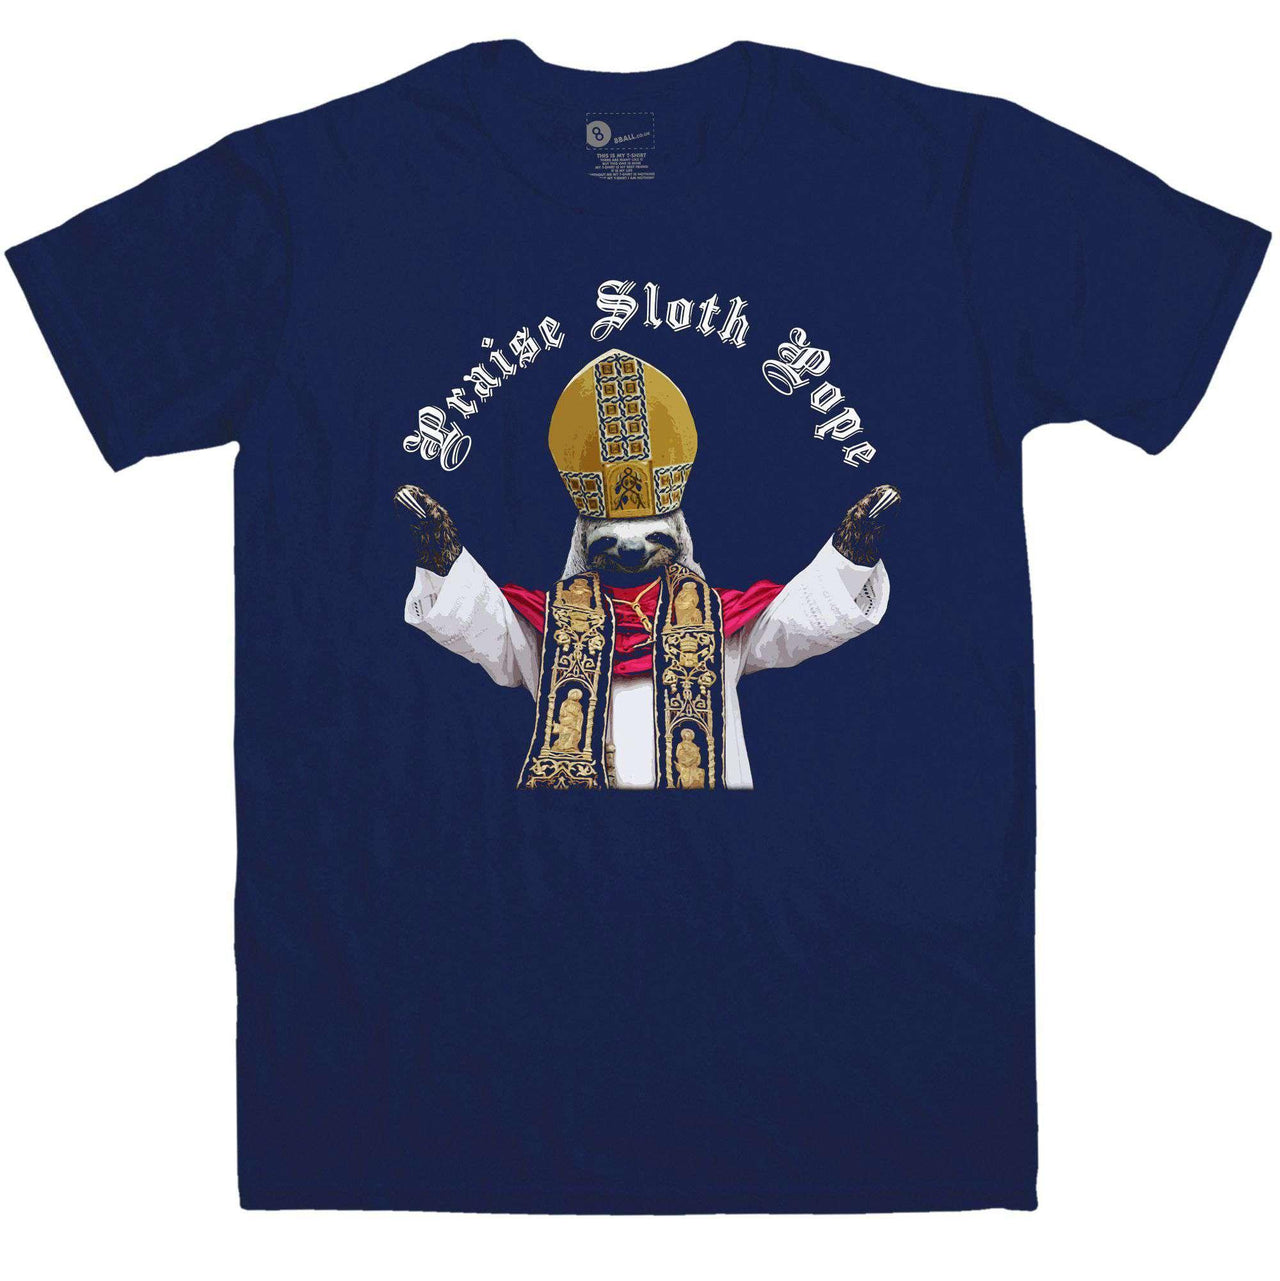 Sloth Sloth Pope T-Shirt For Men 8Ball